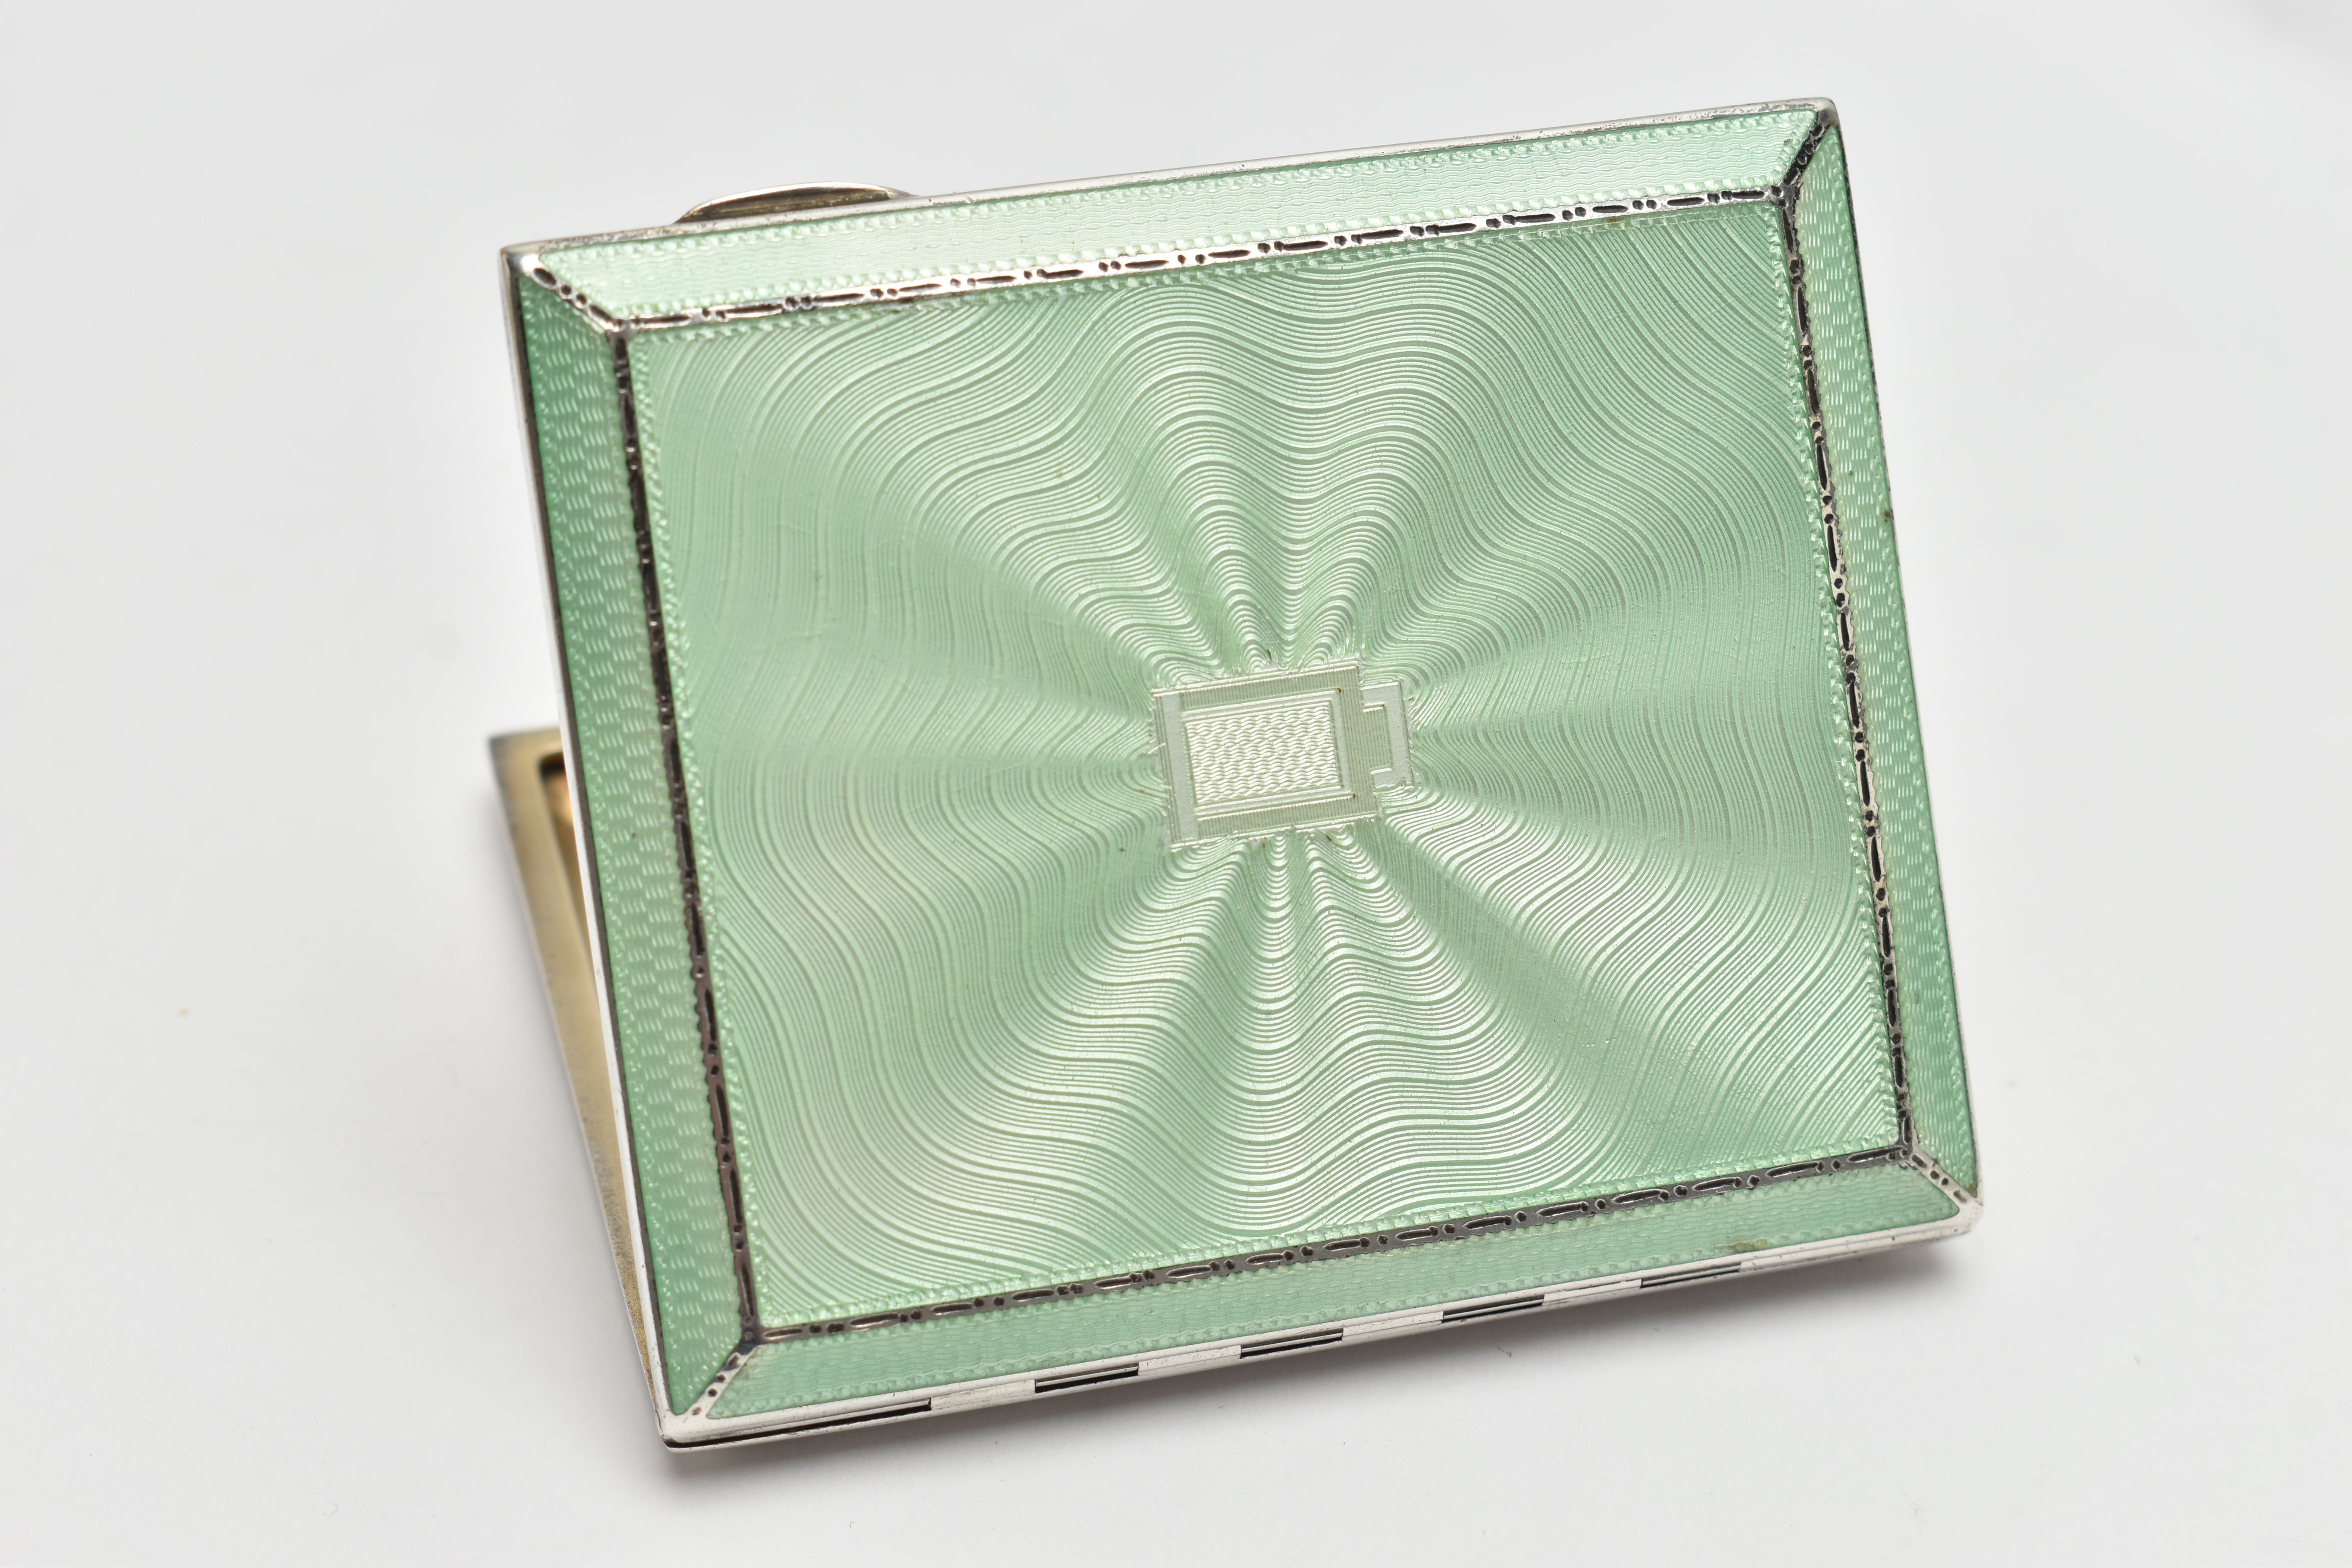 A SILVER AND GUILLOCHE ENAMEL CIGARETTE CASE, rectangular form case, mint green guilloche enamel